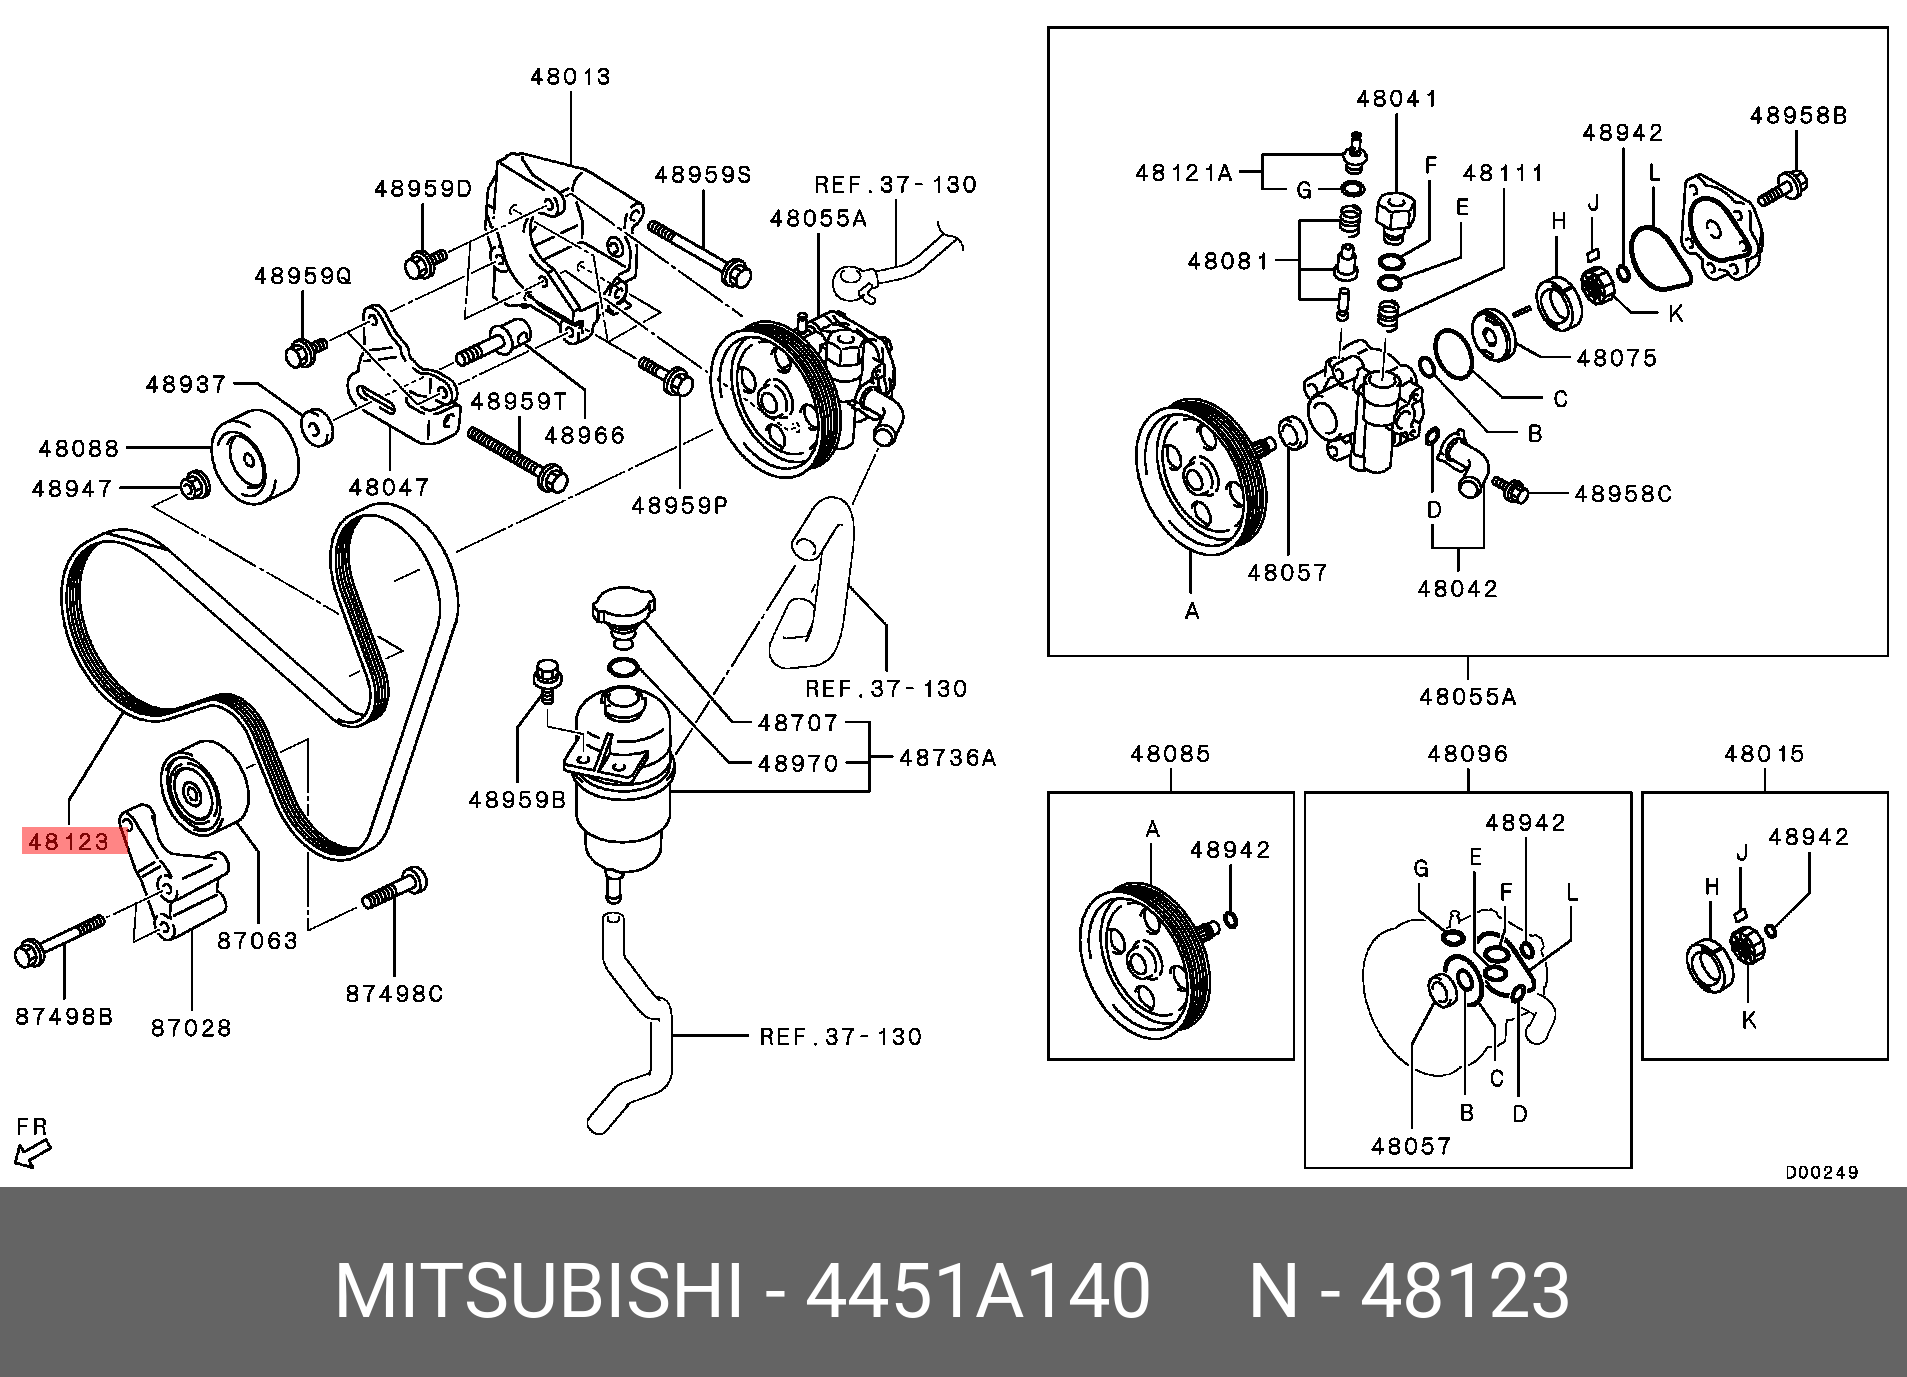 Ремень привода насоса ГУР - Mitsubishi 4451A140